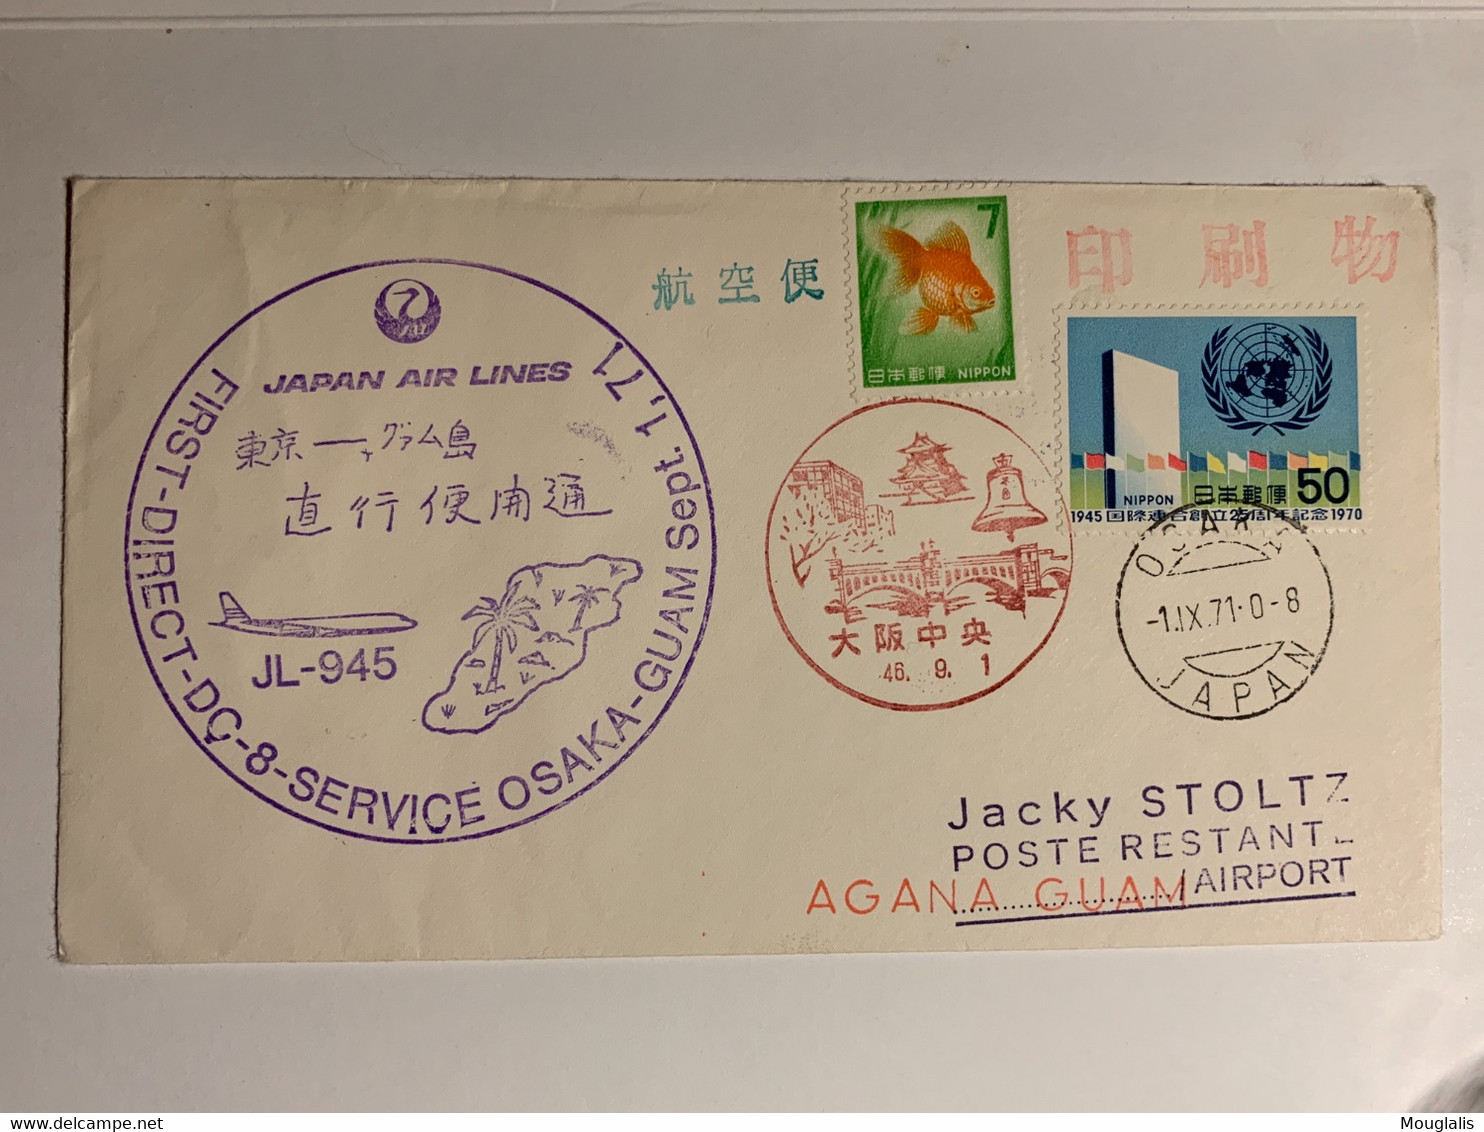 Japon Air Lines First Direct-DC-8-service Osaka Grand Tampon Rond Violet Agana Guam Osaka 1971 - Airmail